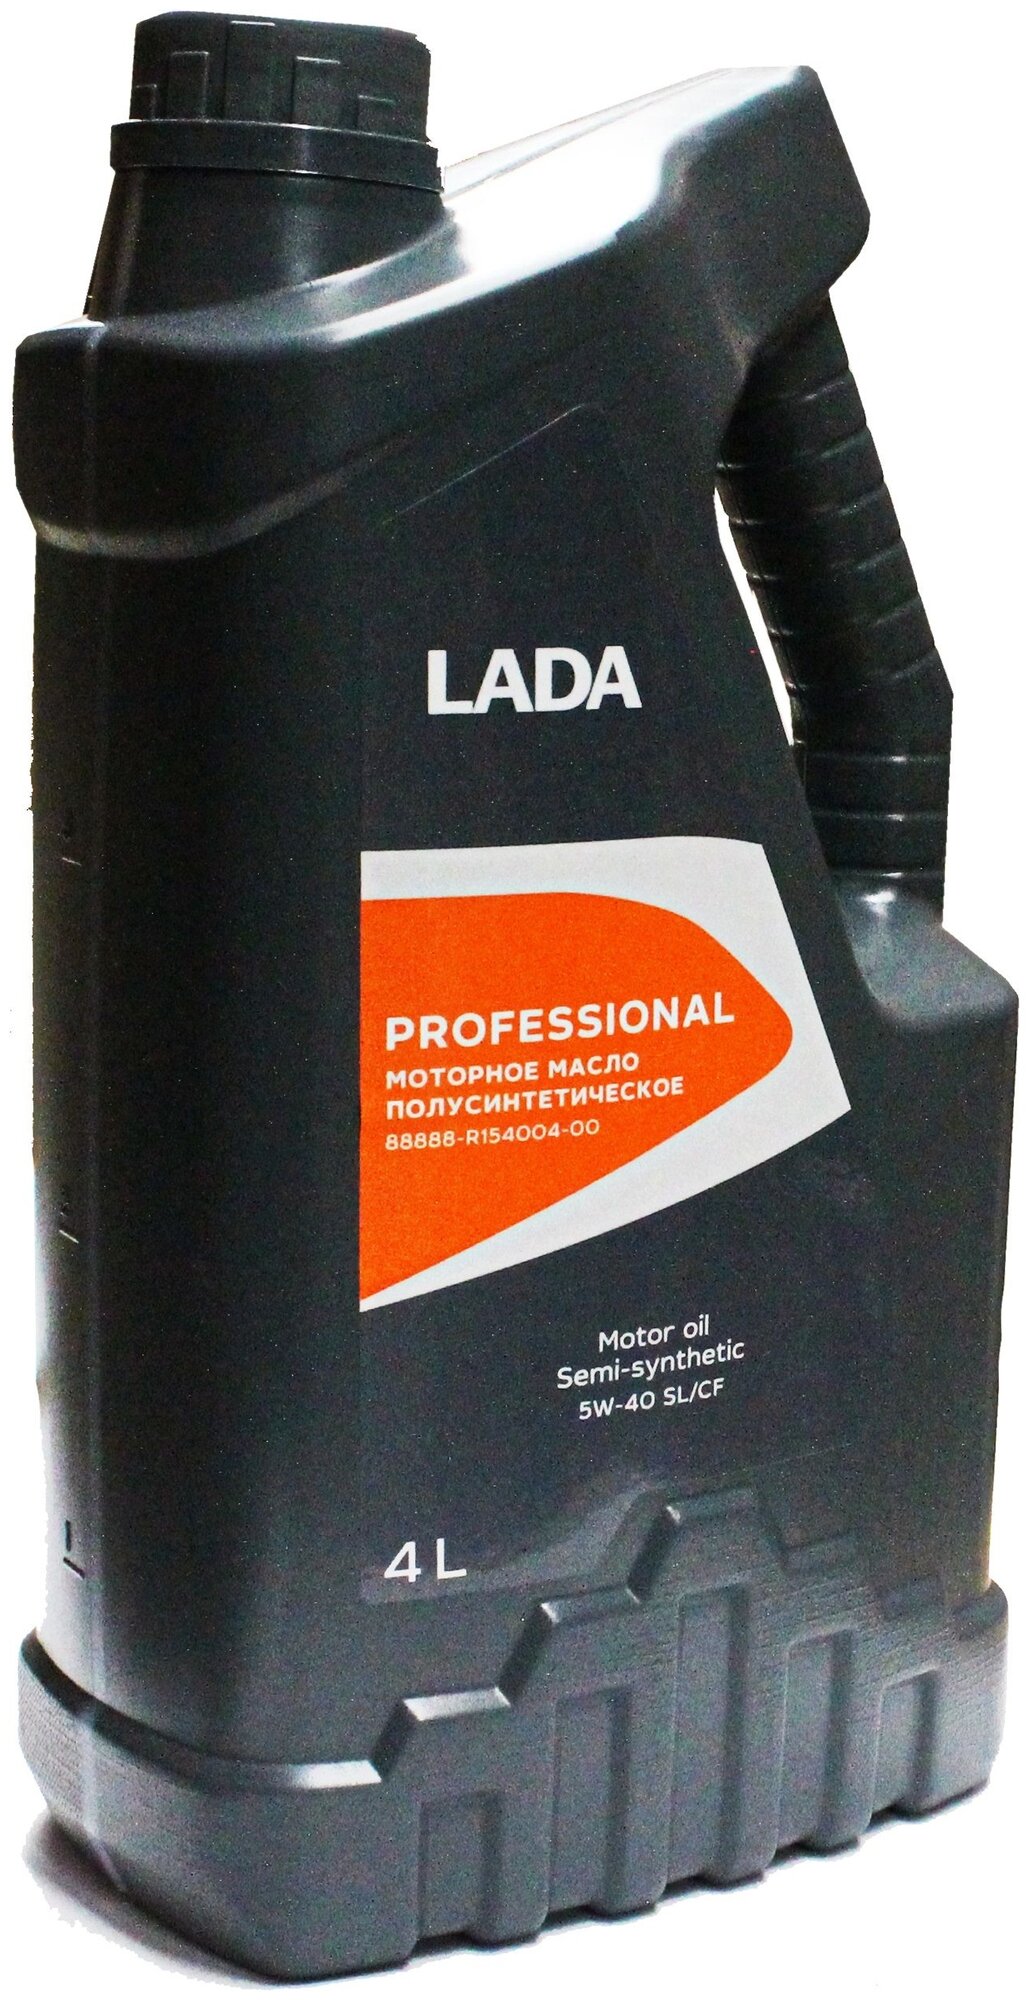 Полусинтетическое моторное масло LADA Professional 5W-40